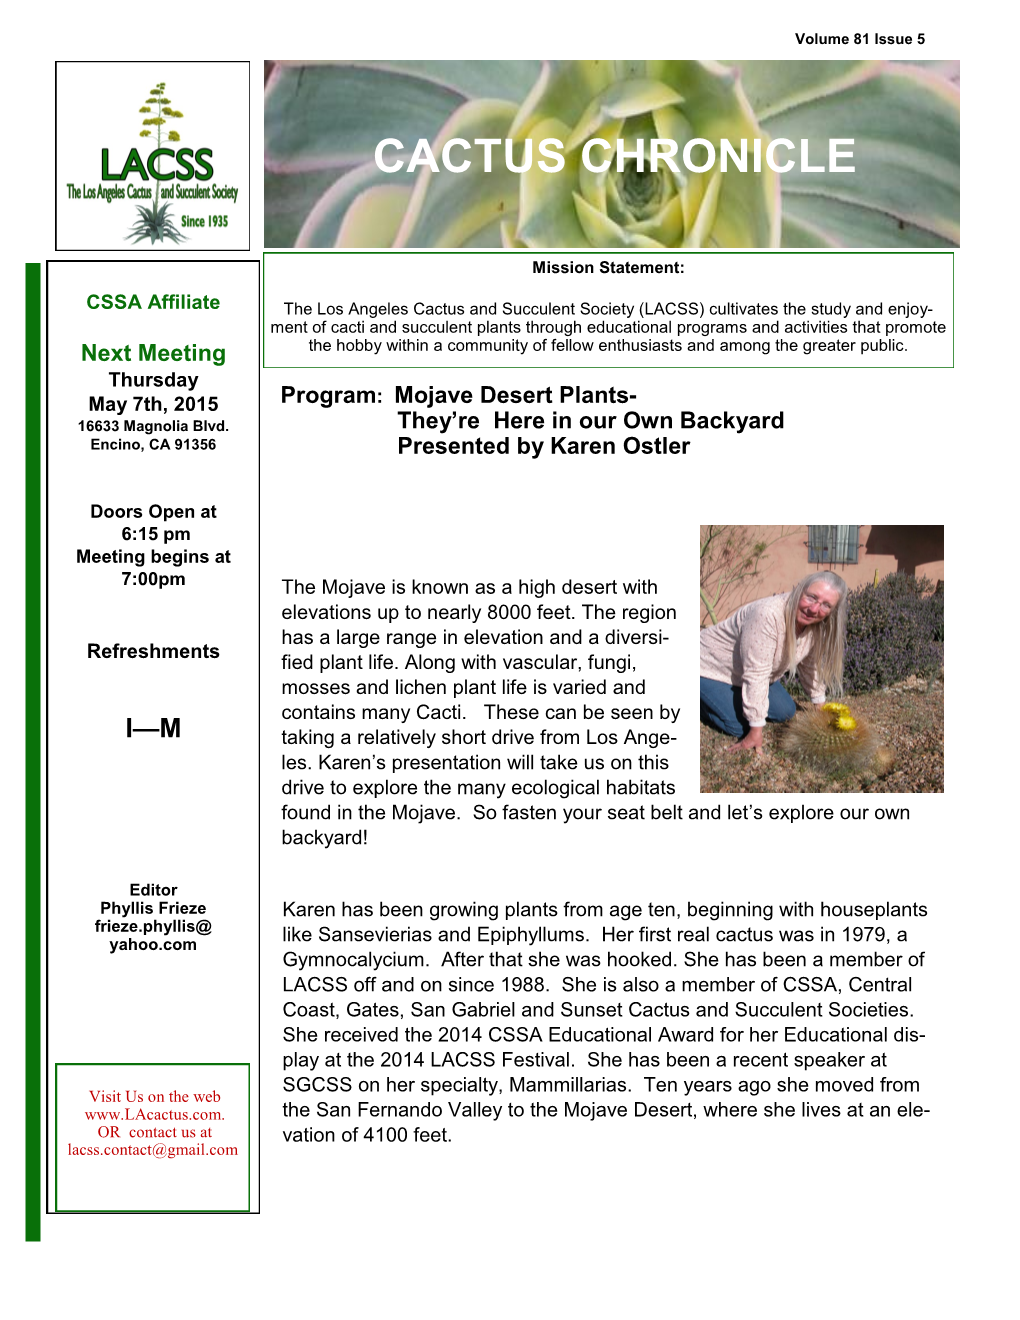 May 7Th, 2015 Program: Mojave Desert Plants- 16633 Magnolia Blvd